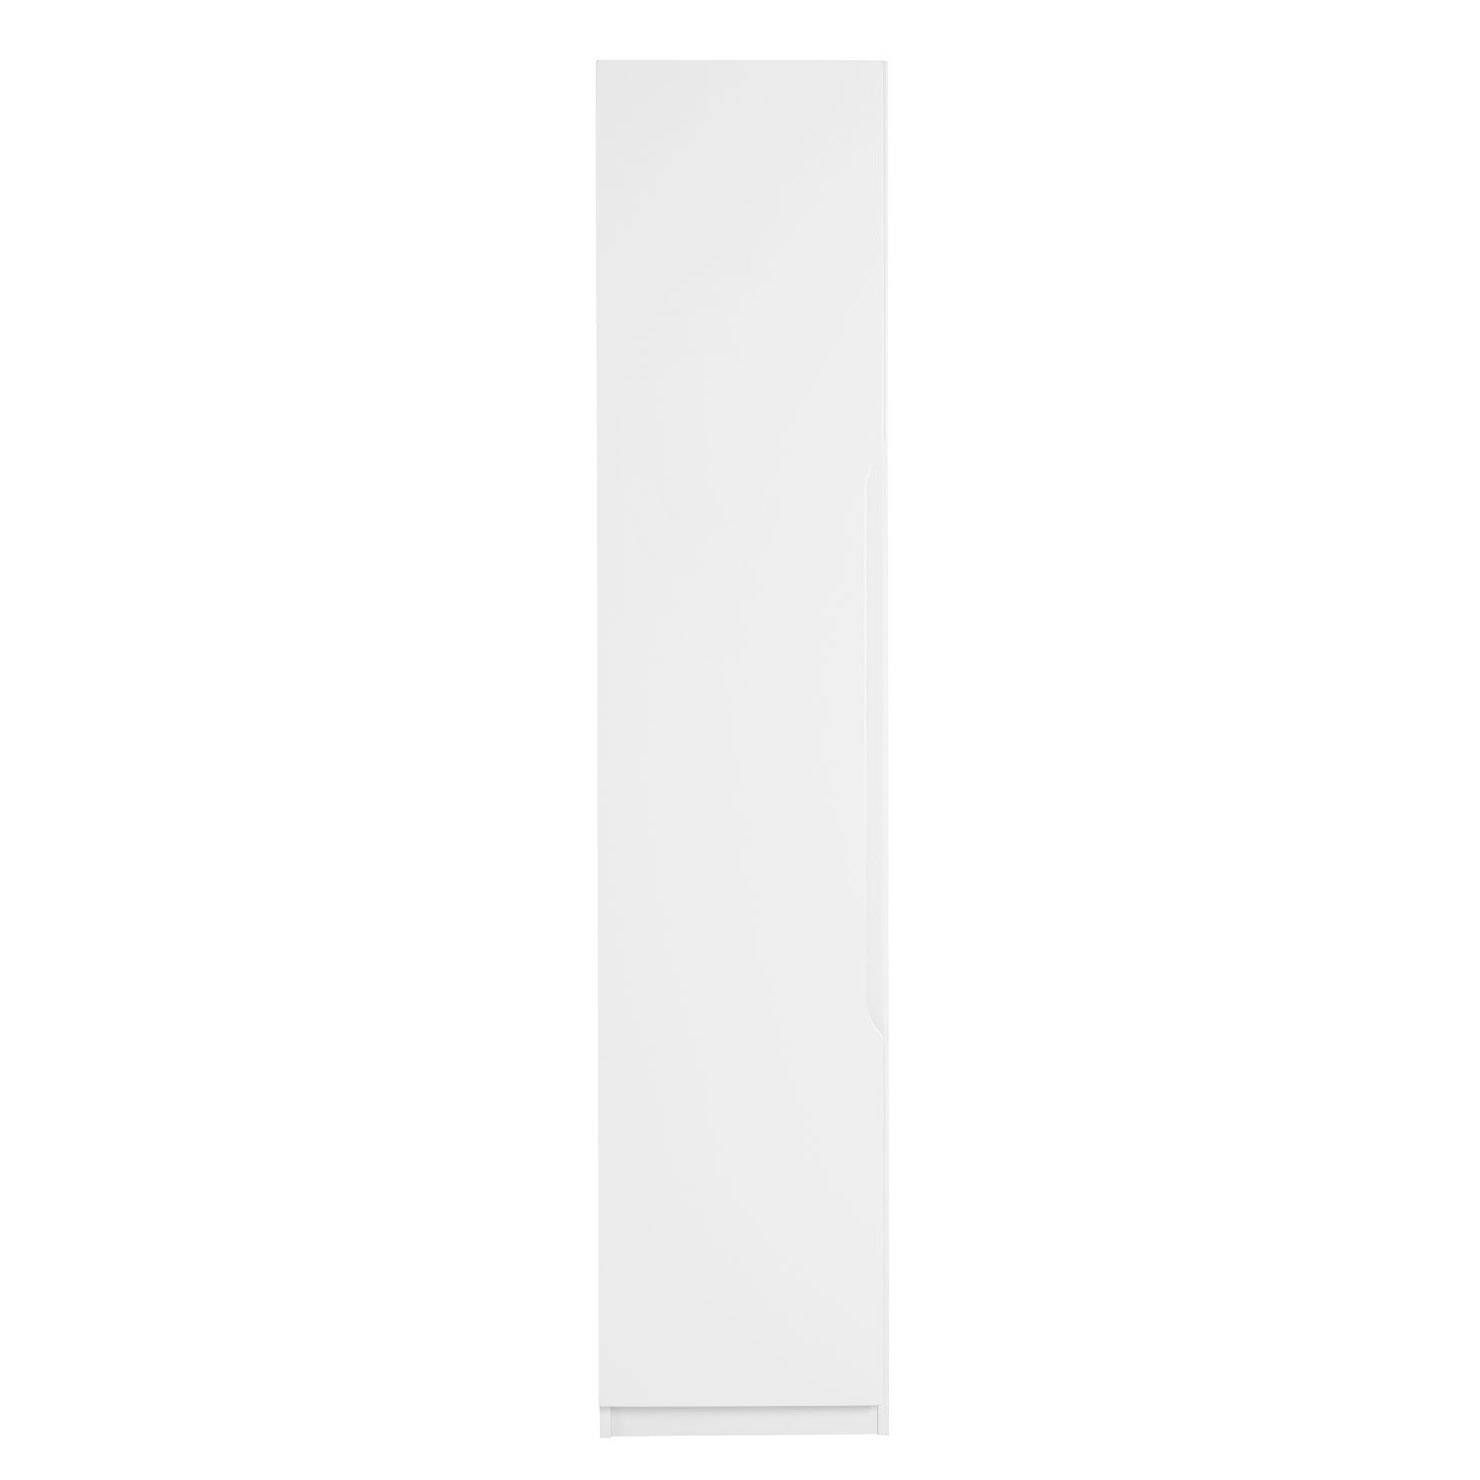 Legato Tall 1 Door Wardrobe, White Gloss | Achica With Tall White Gloss Wardrobes (View 7 of 15)